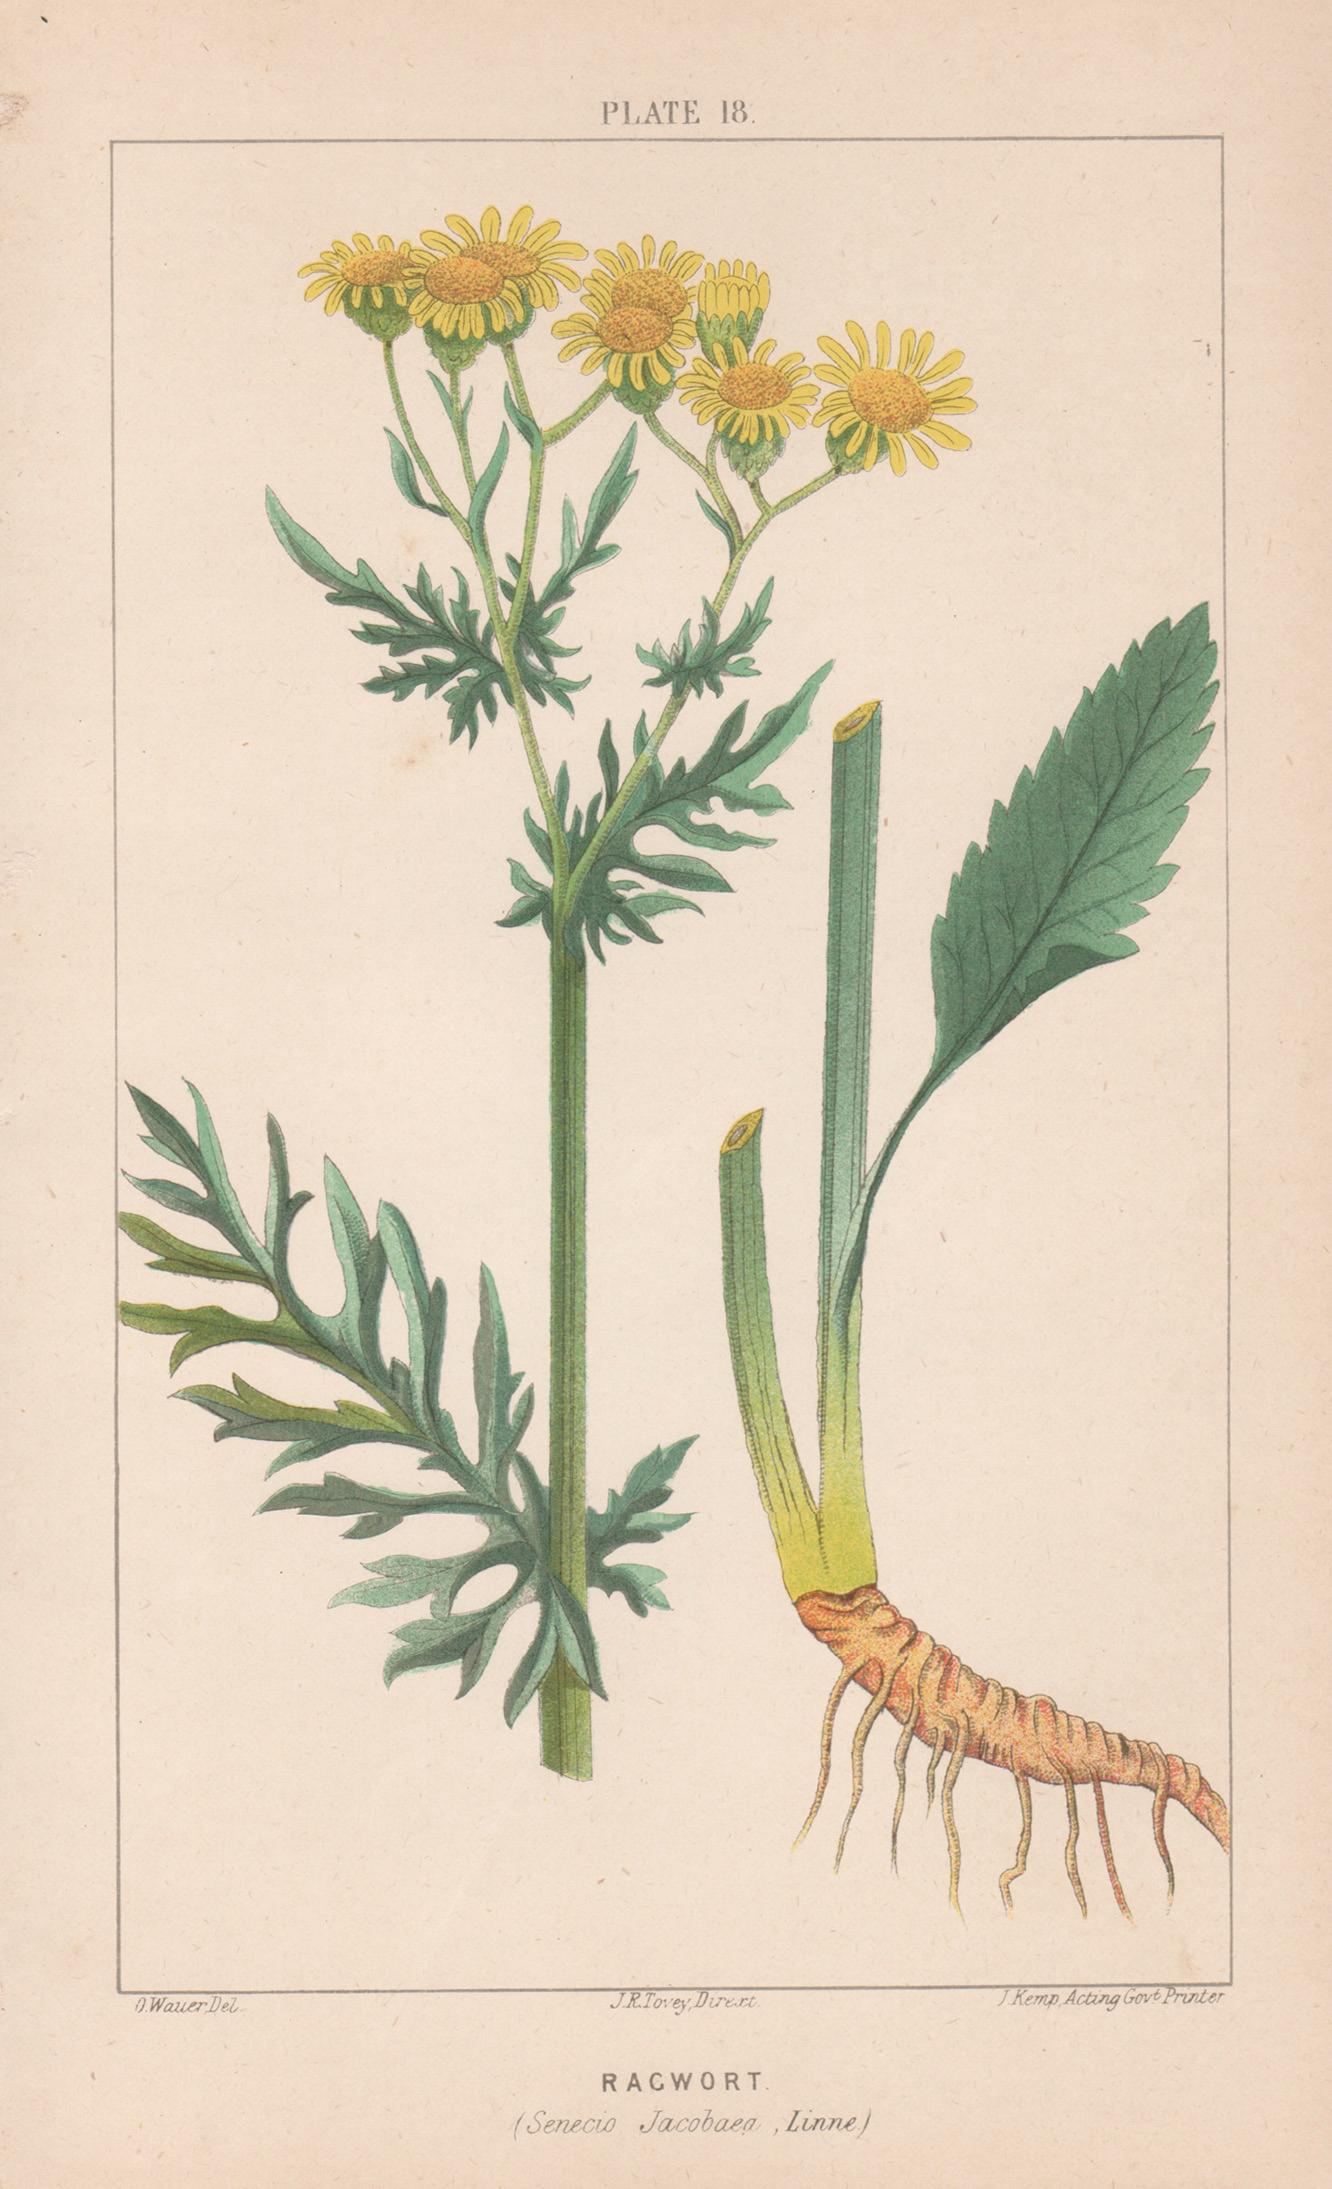 O Wauer Print – Ragwort (Senecio Jacobaea), antike botanische Lithographie